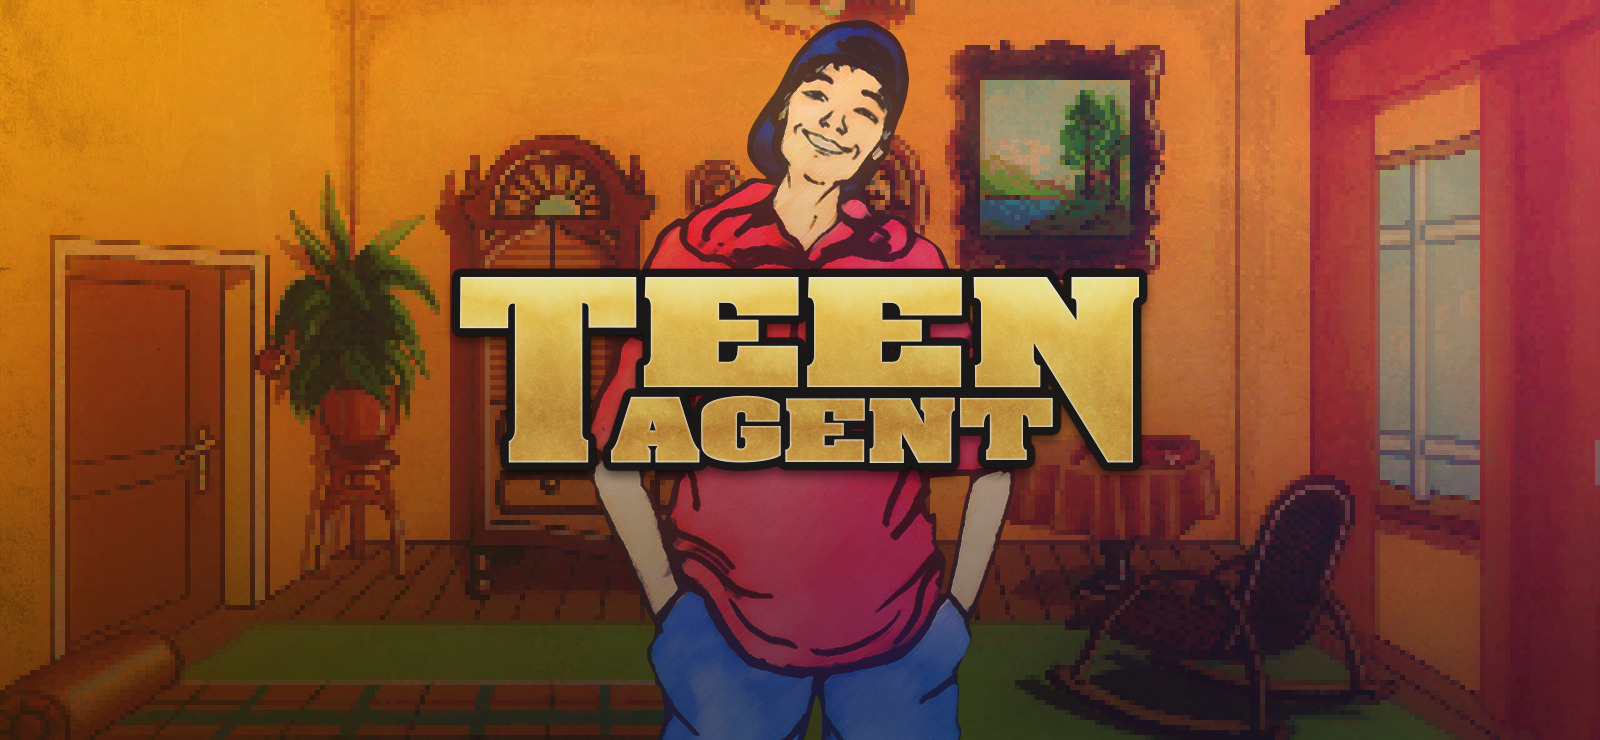 teenagent length